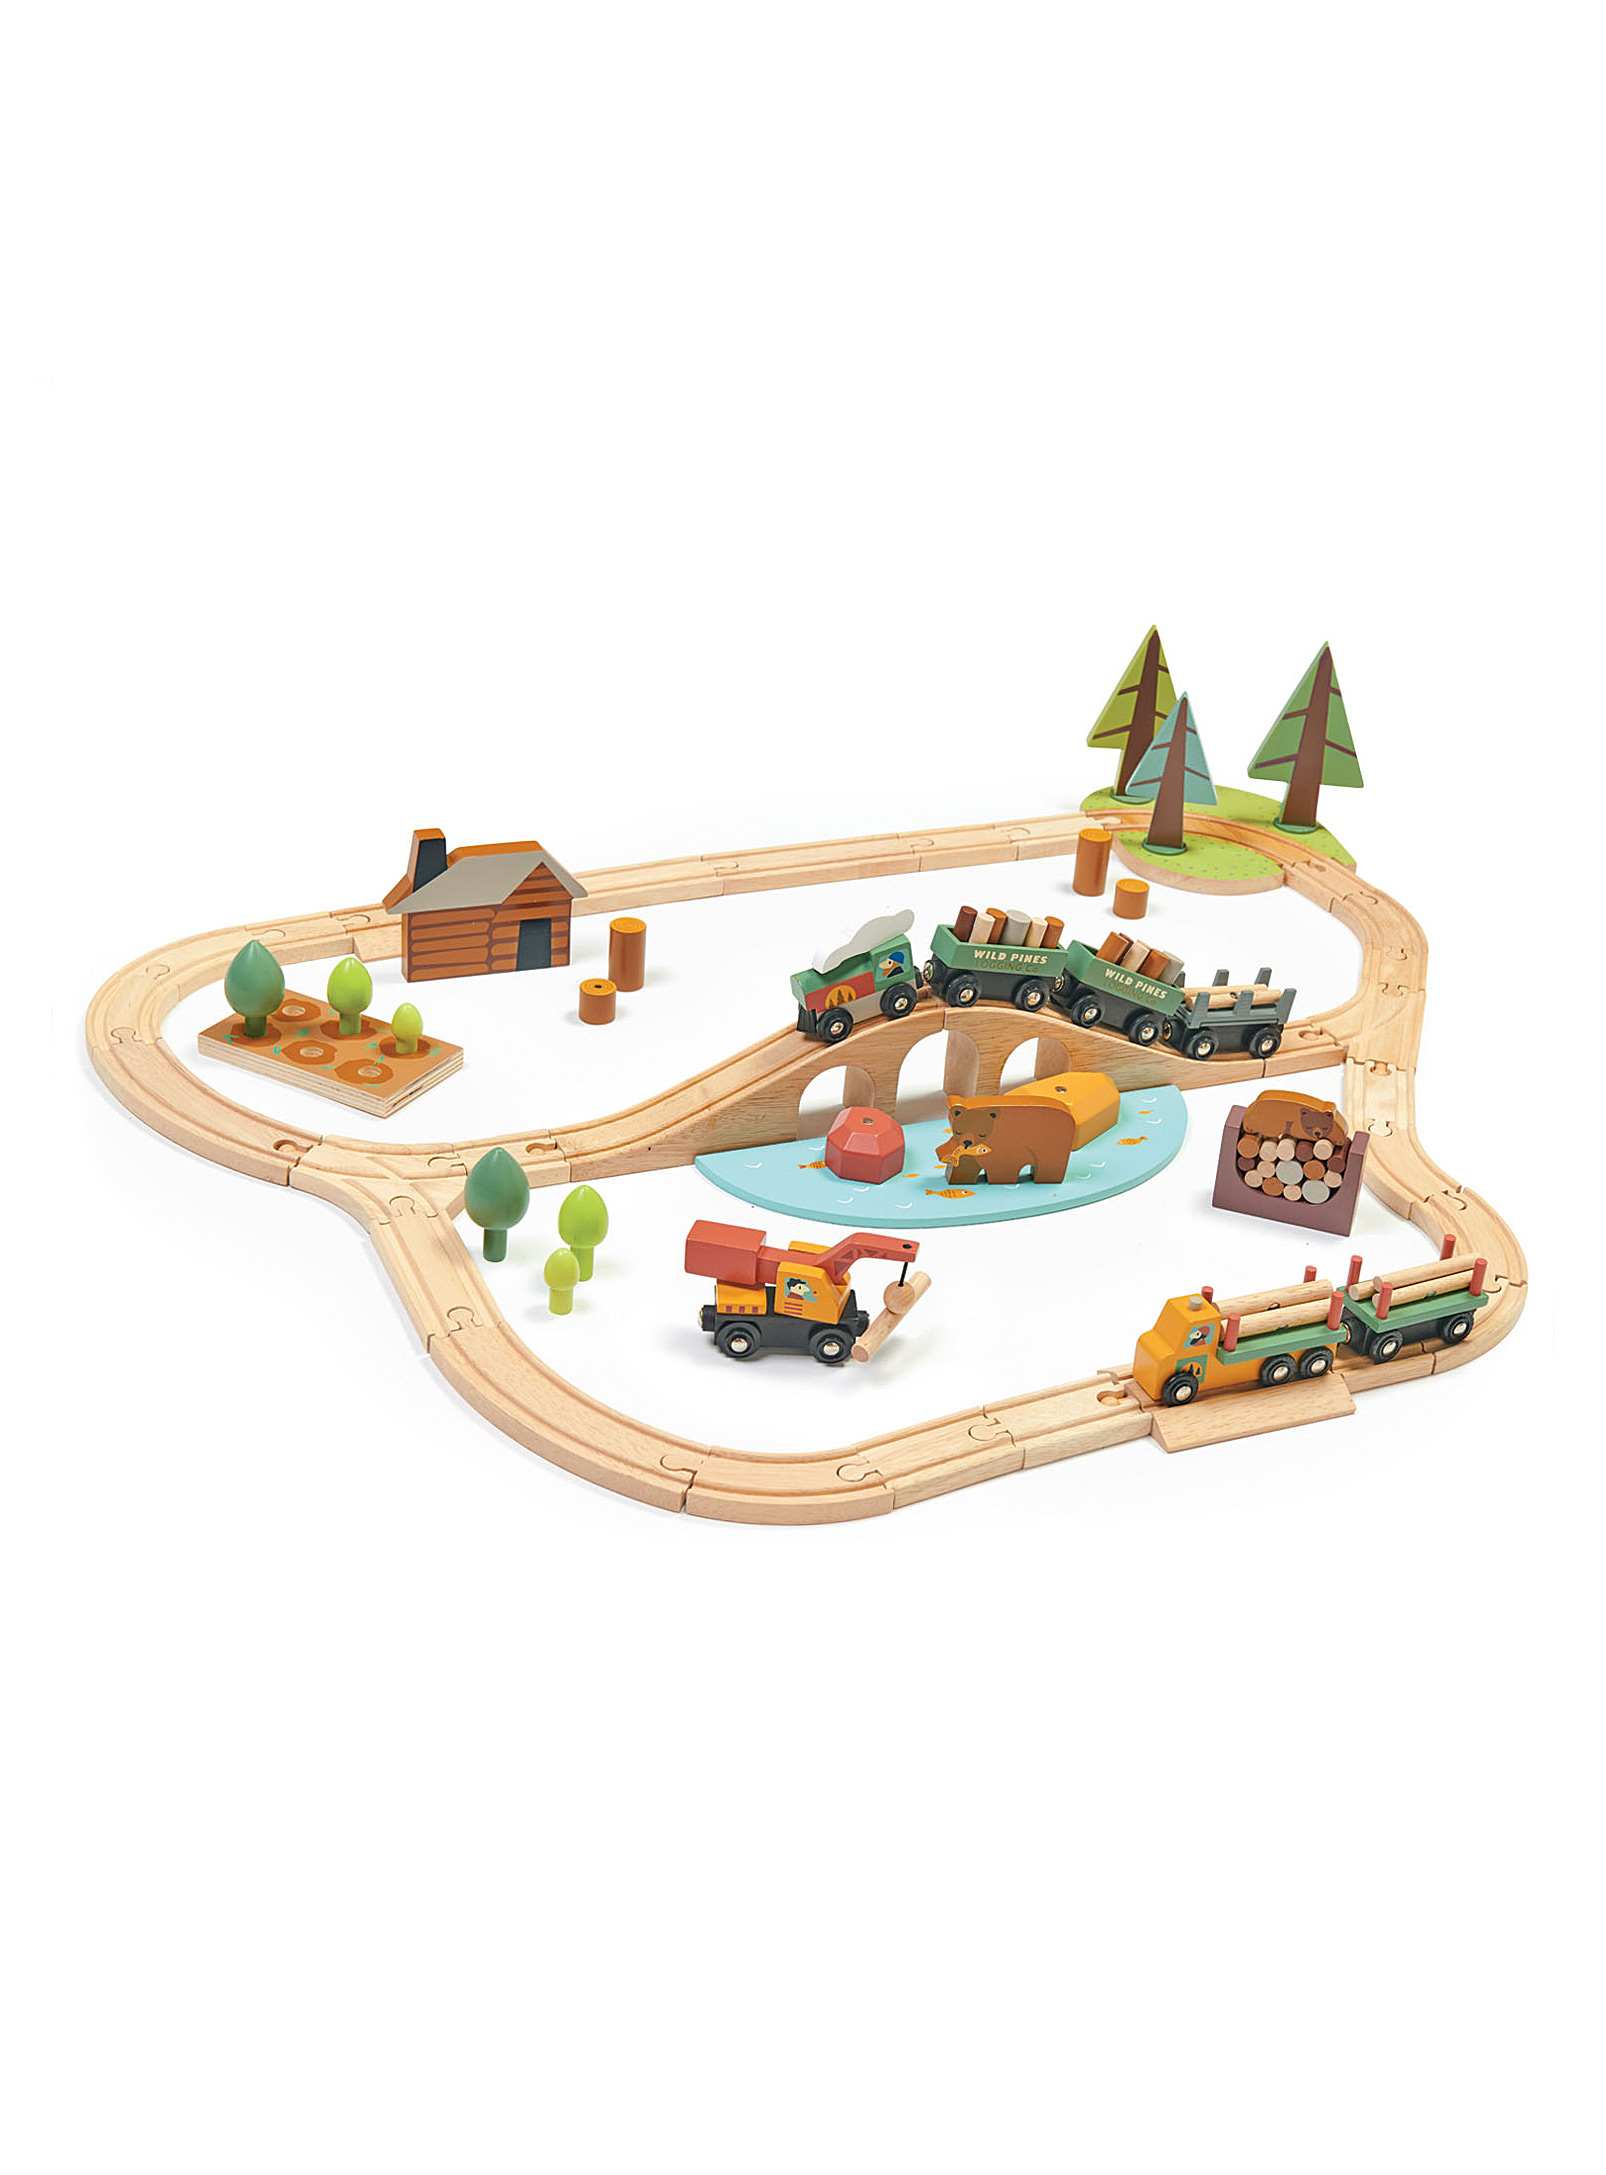 Tender Leaf Toys - Forest excursion wooden train set 30-piece set